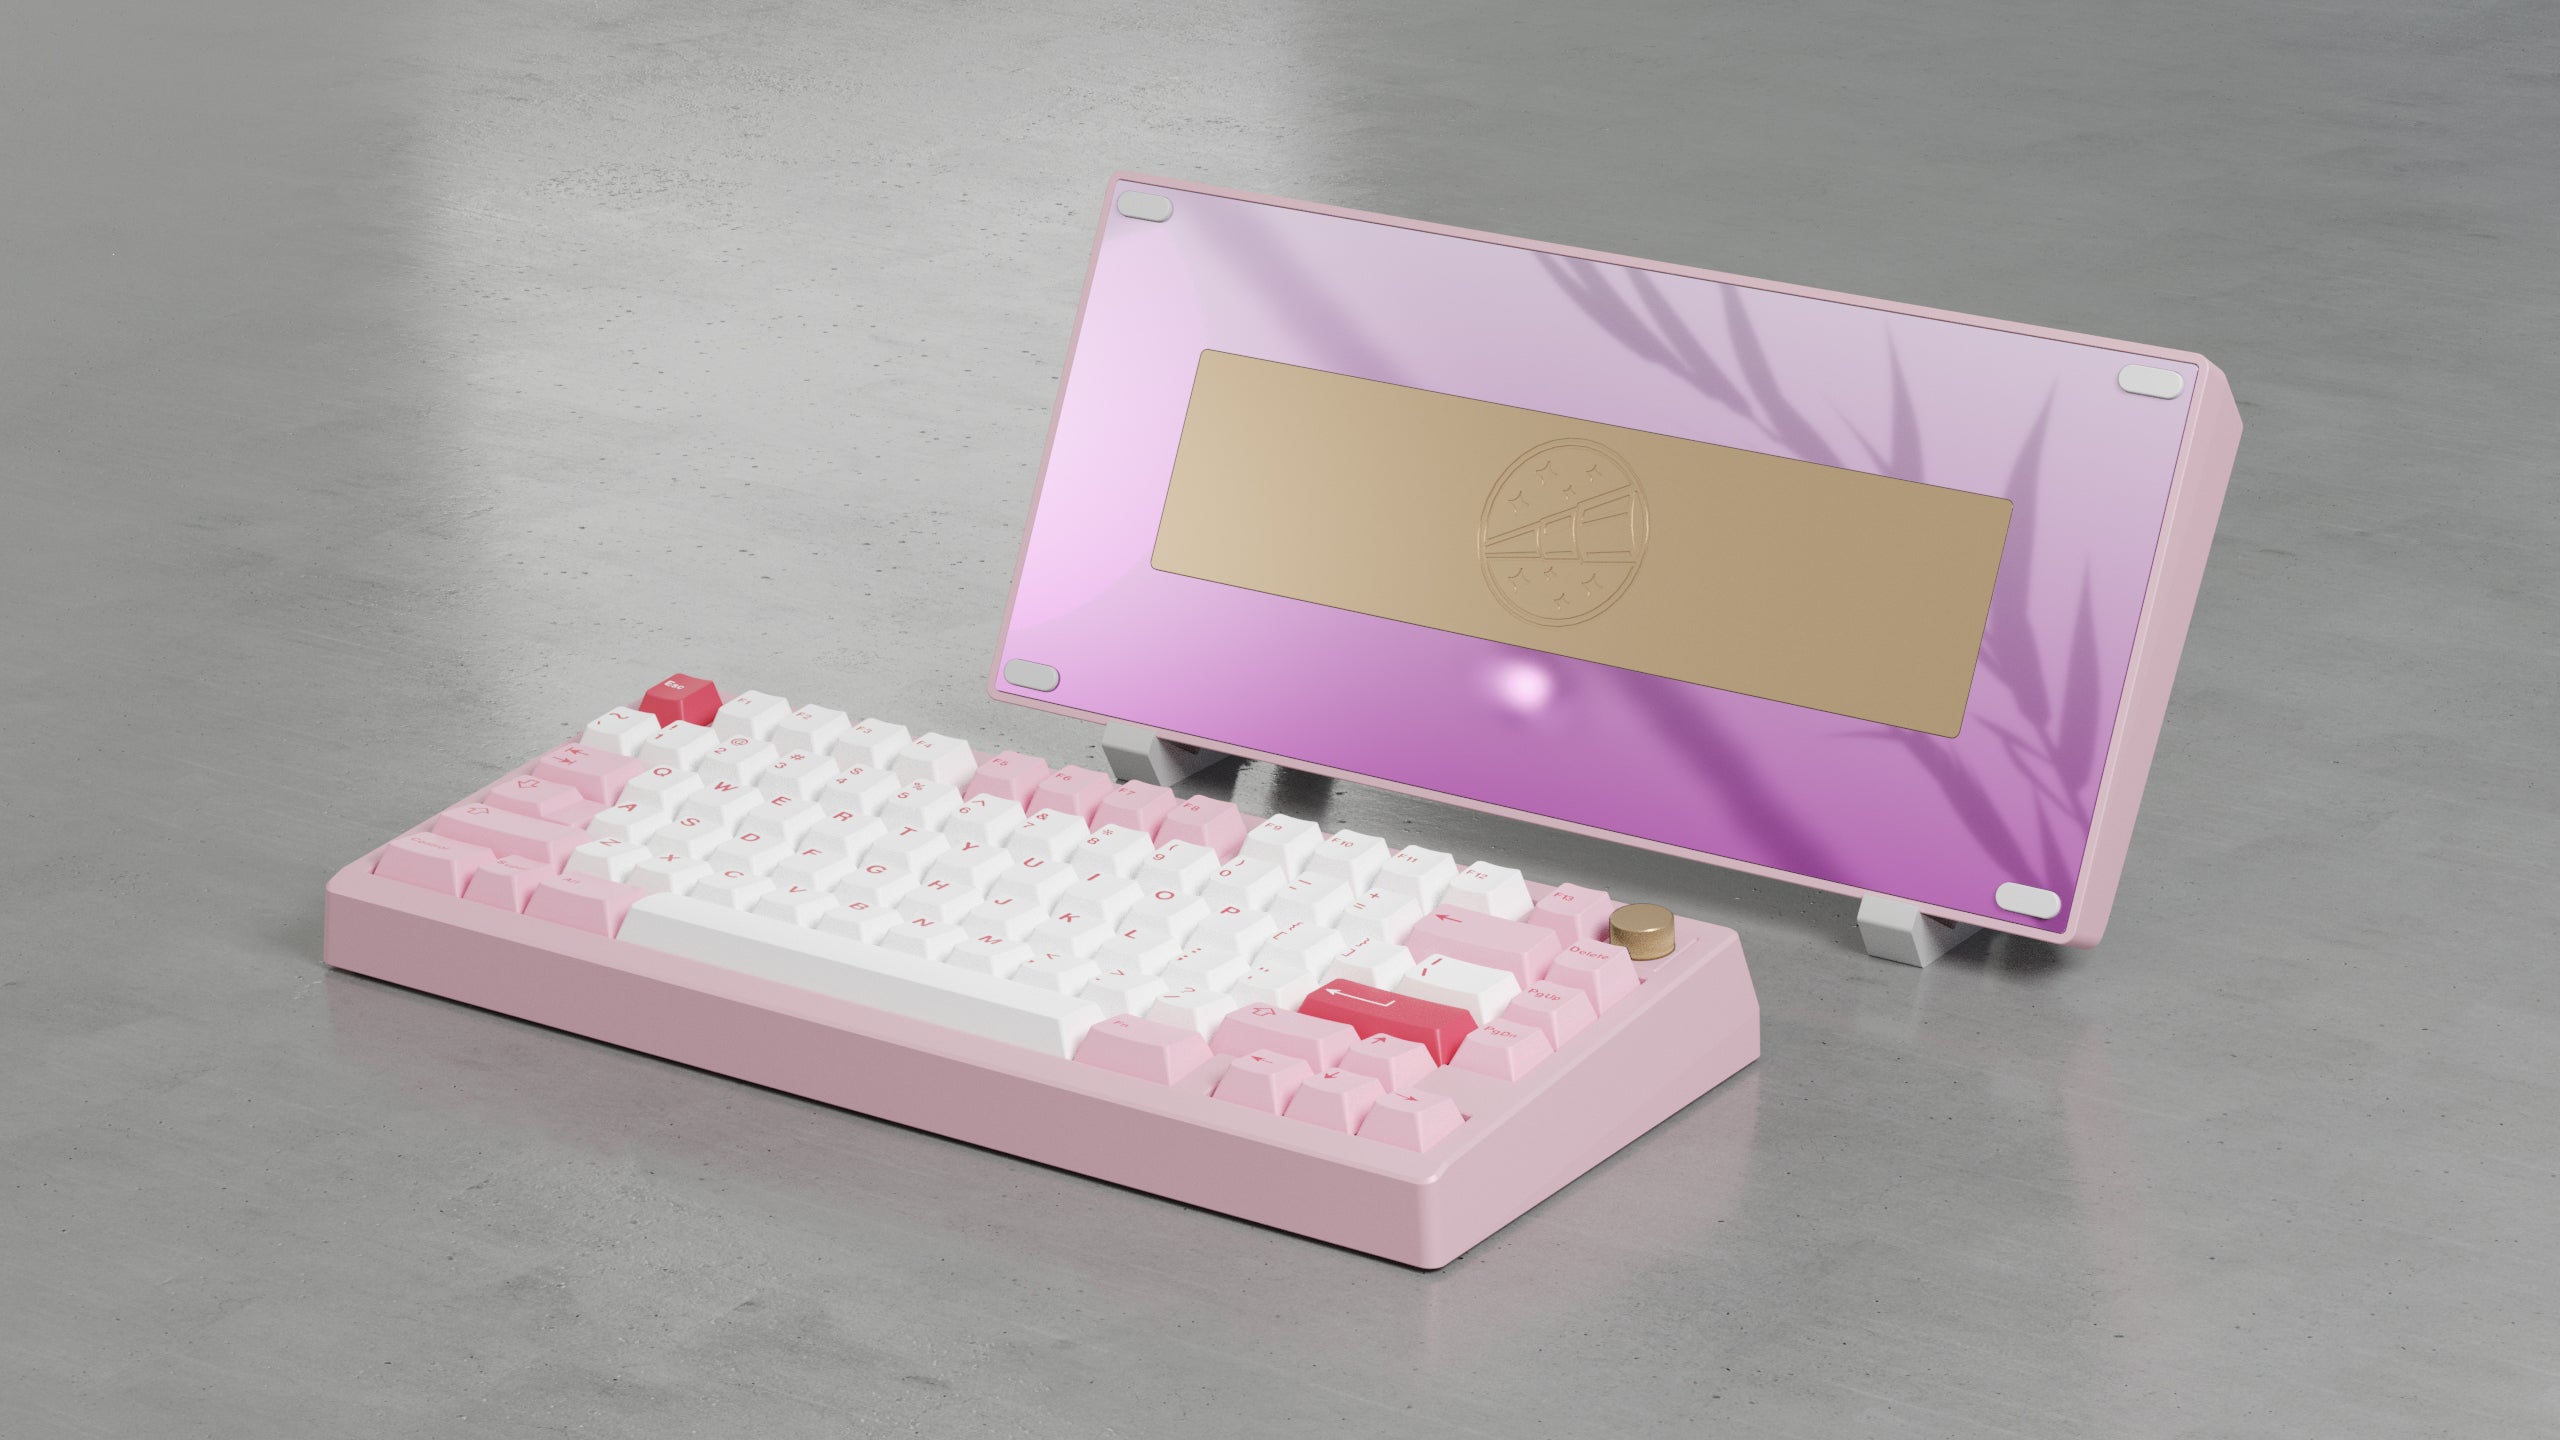 Zoom75 EE Keyboard - Blush Pink [Preorder]